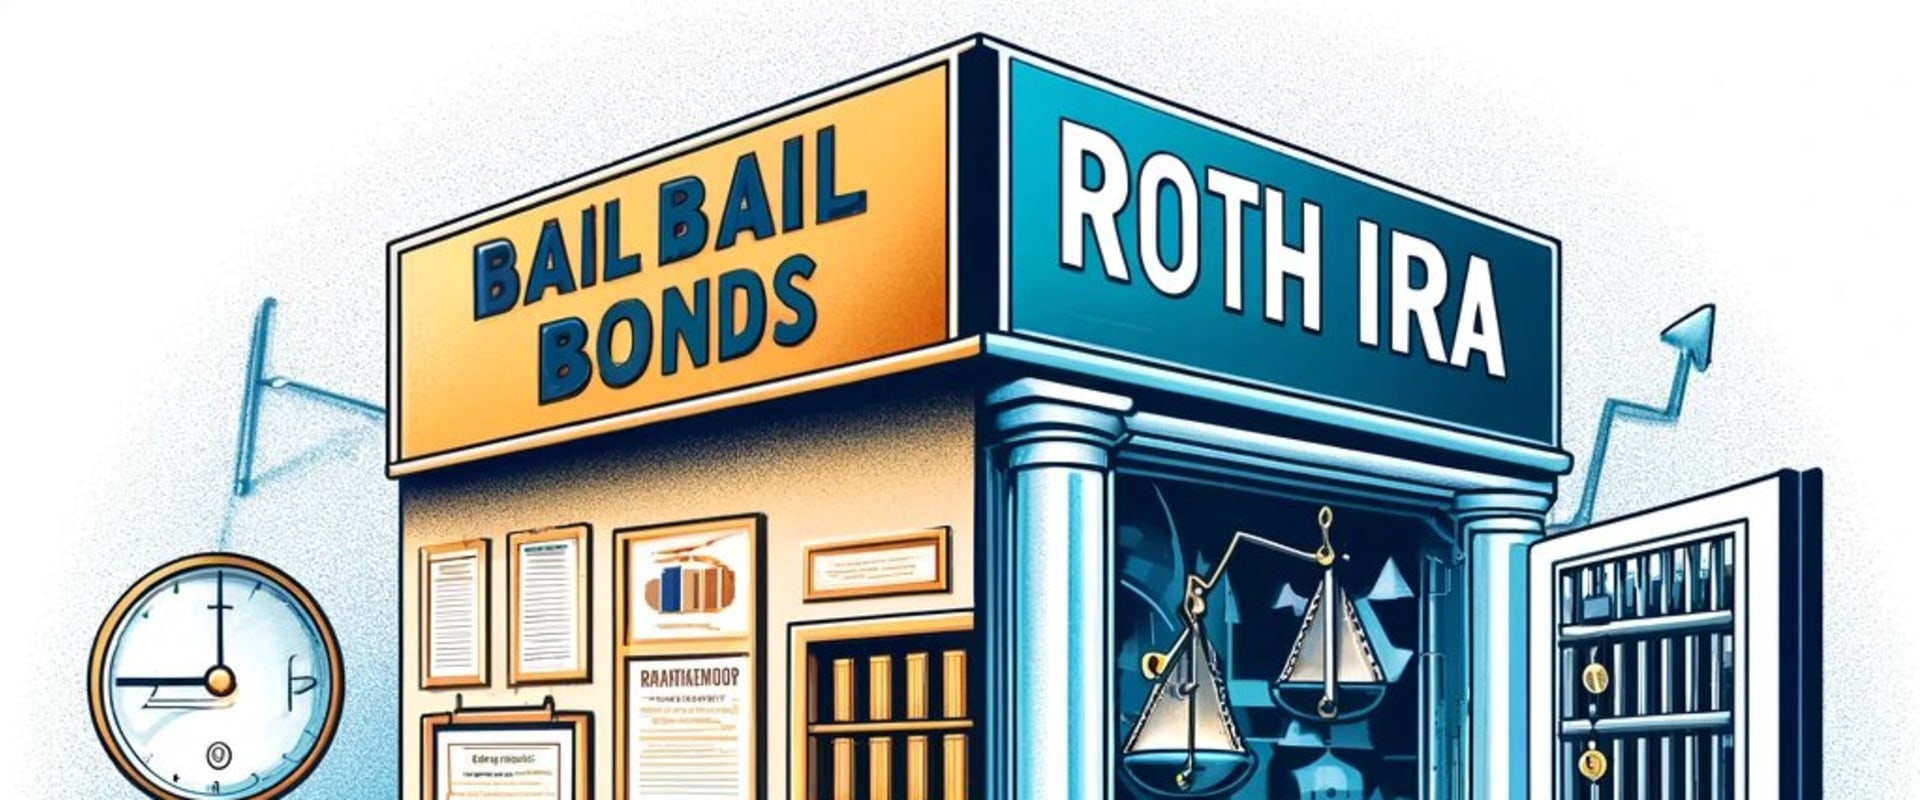 Bright Bail Bonds & Roth IRA: A Surprising Mix